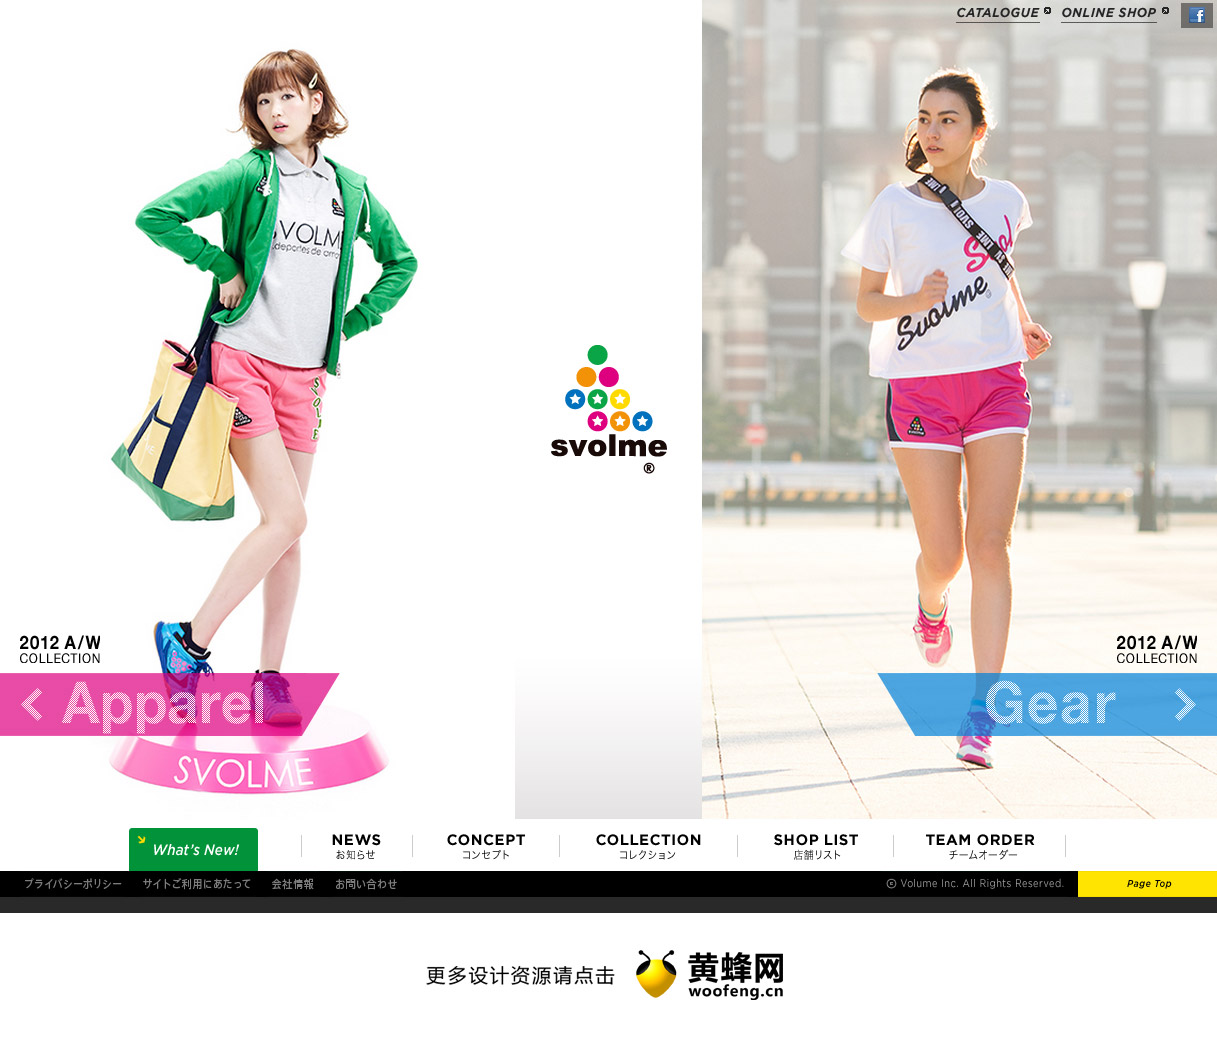 SVOLME服饰品牌网站，来源自黄蜂网https://woofeng.cn/web/